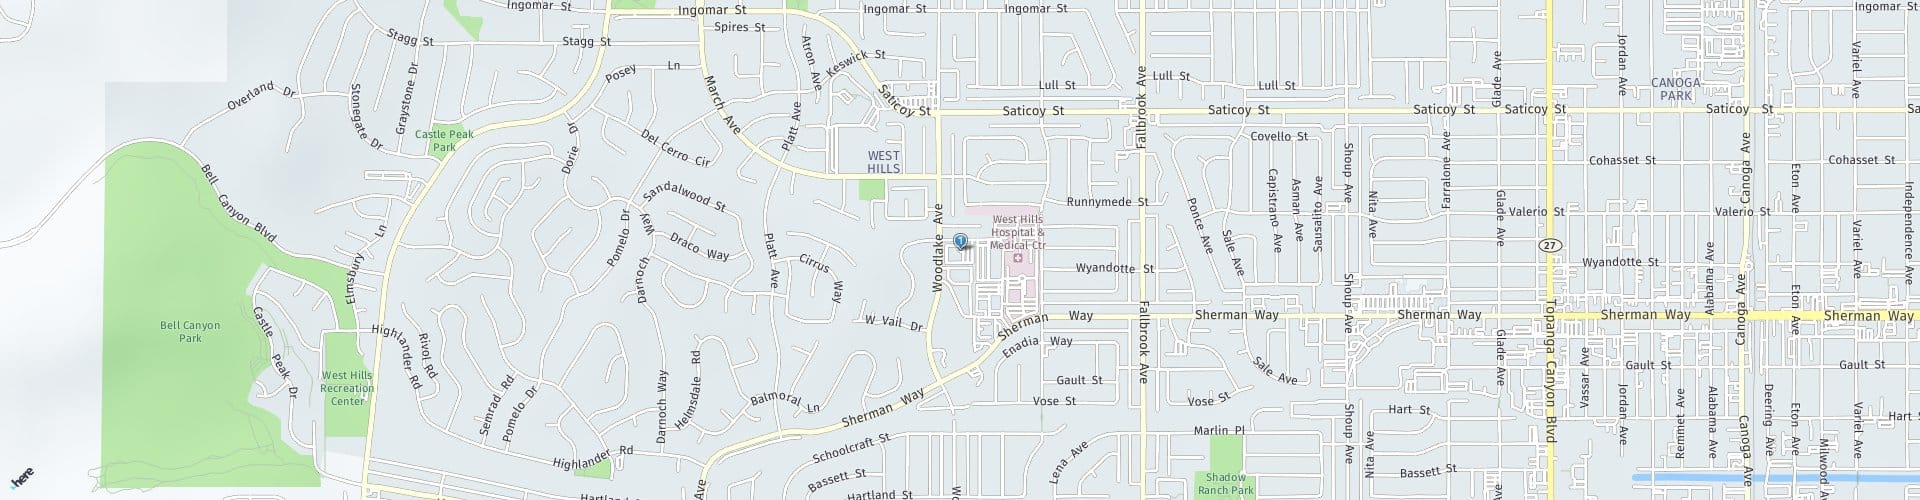 Location Map: 7345 Medical Center Dr. West Hills, CA 91307